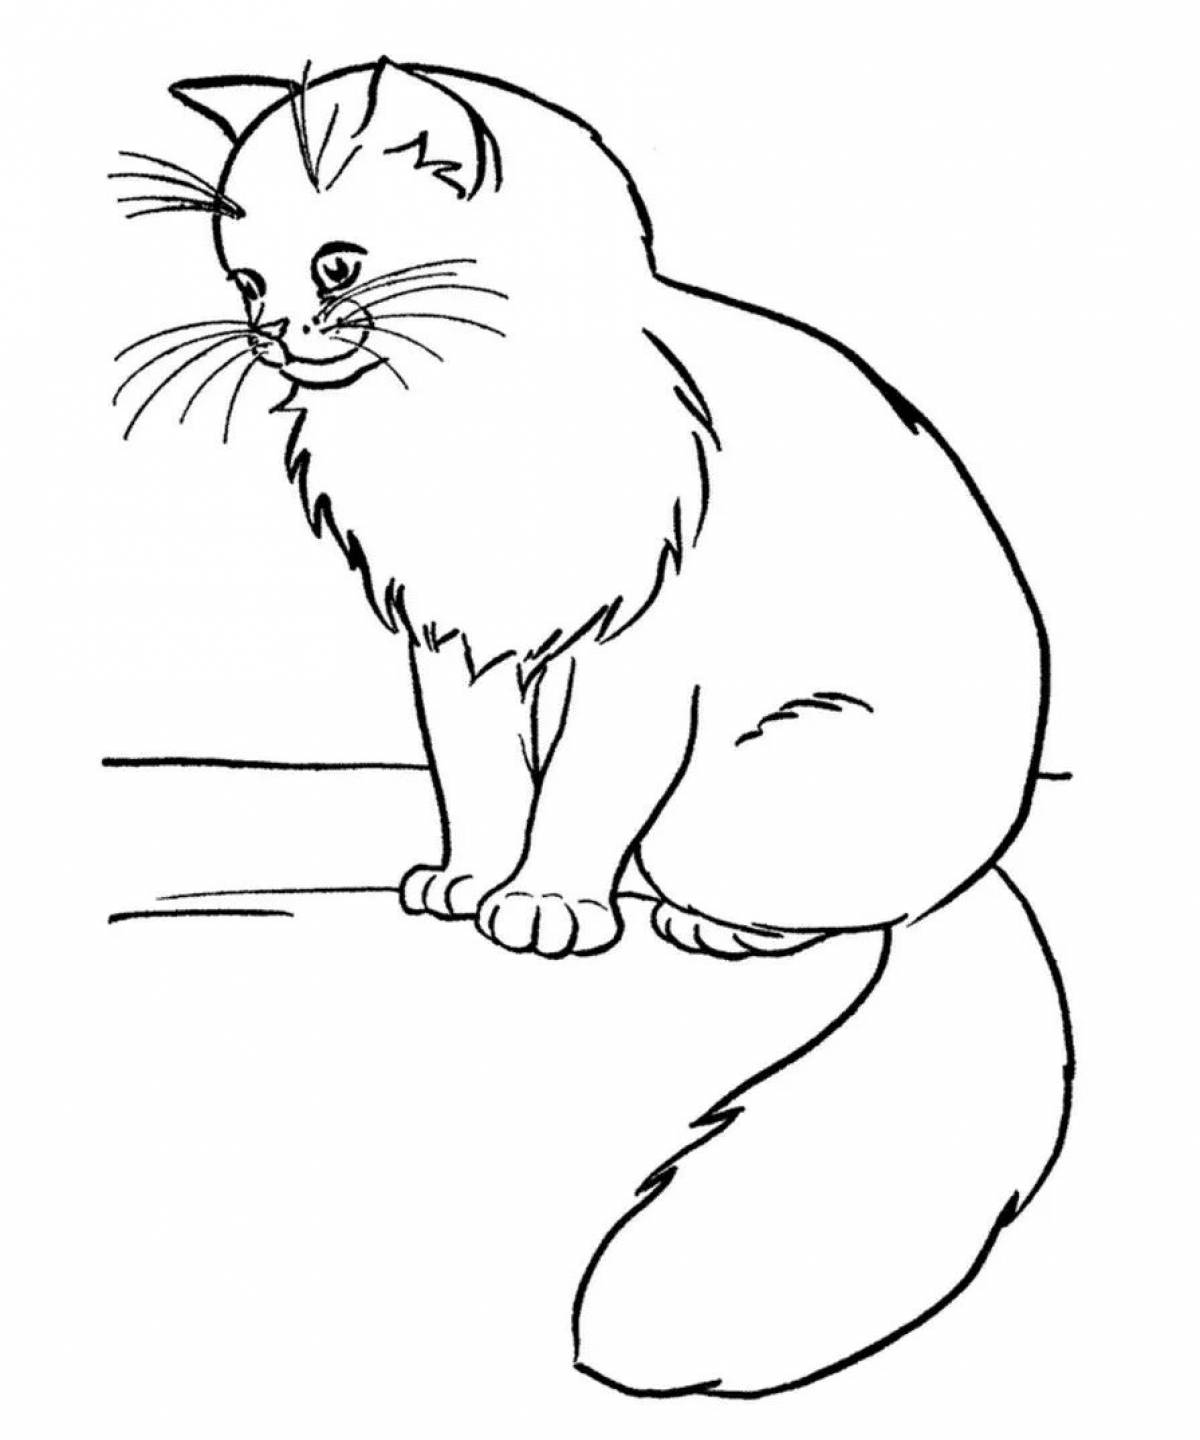 Раскраска пушистая яванская кошка